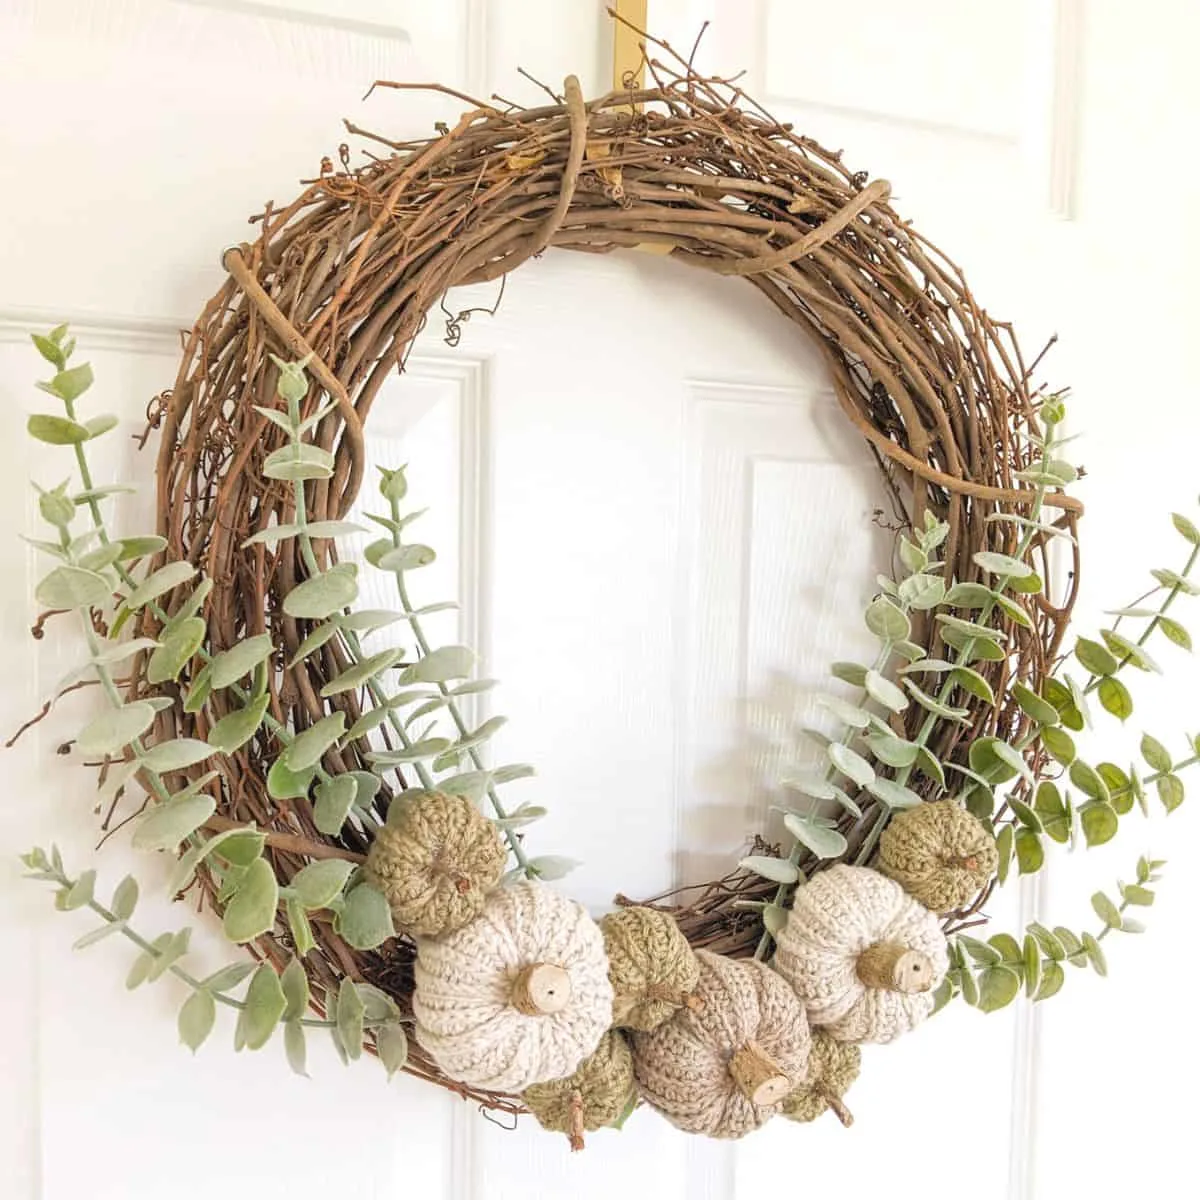 A large grapevine wreath with eucalyptus and handmade crochet pumpkins